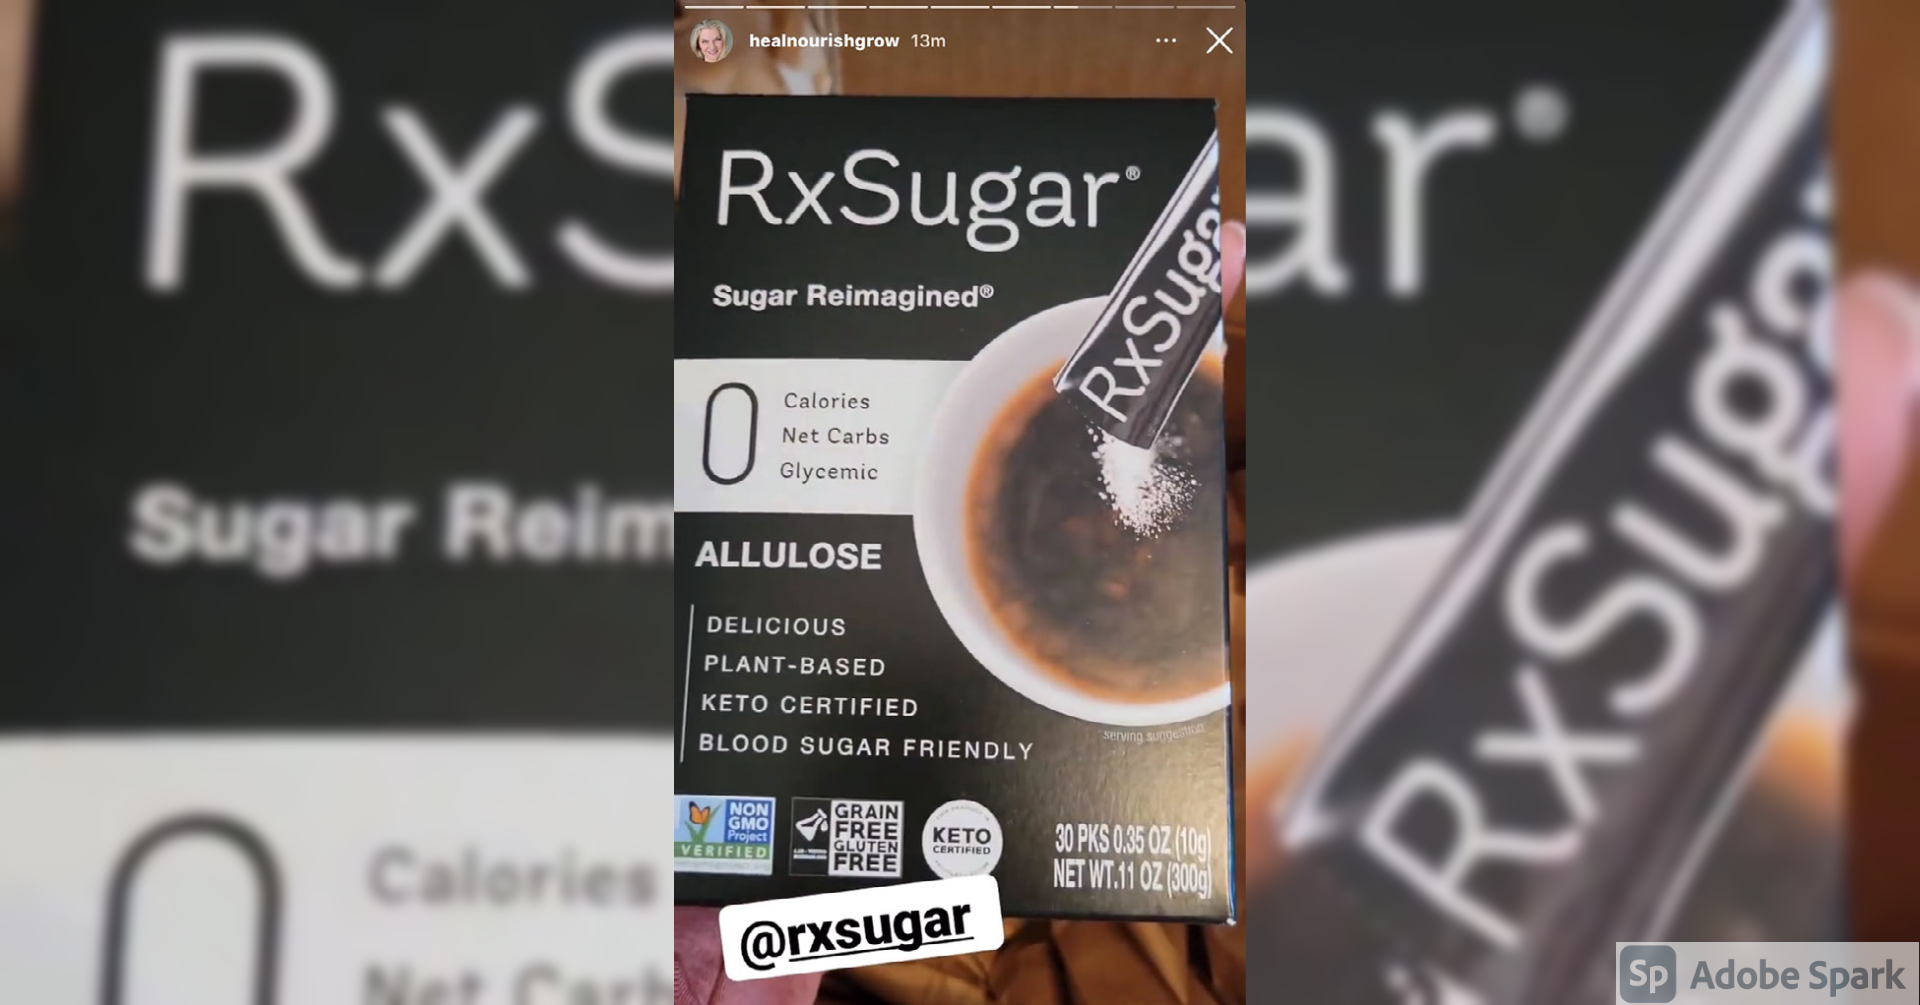 Healnourishgrow Loving Her RxSugar Package!!